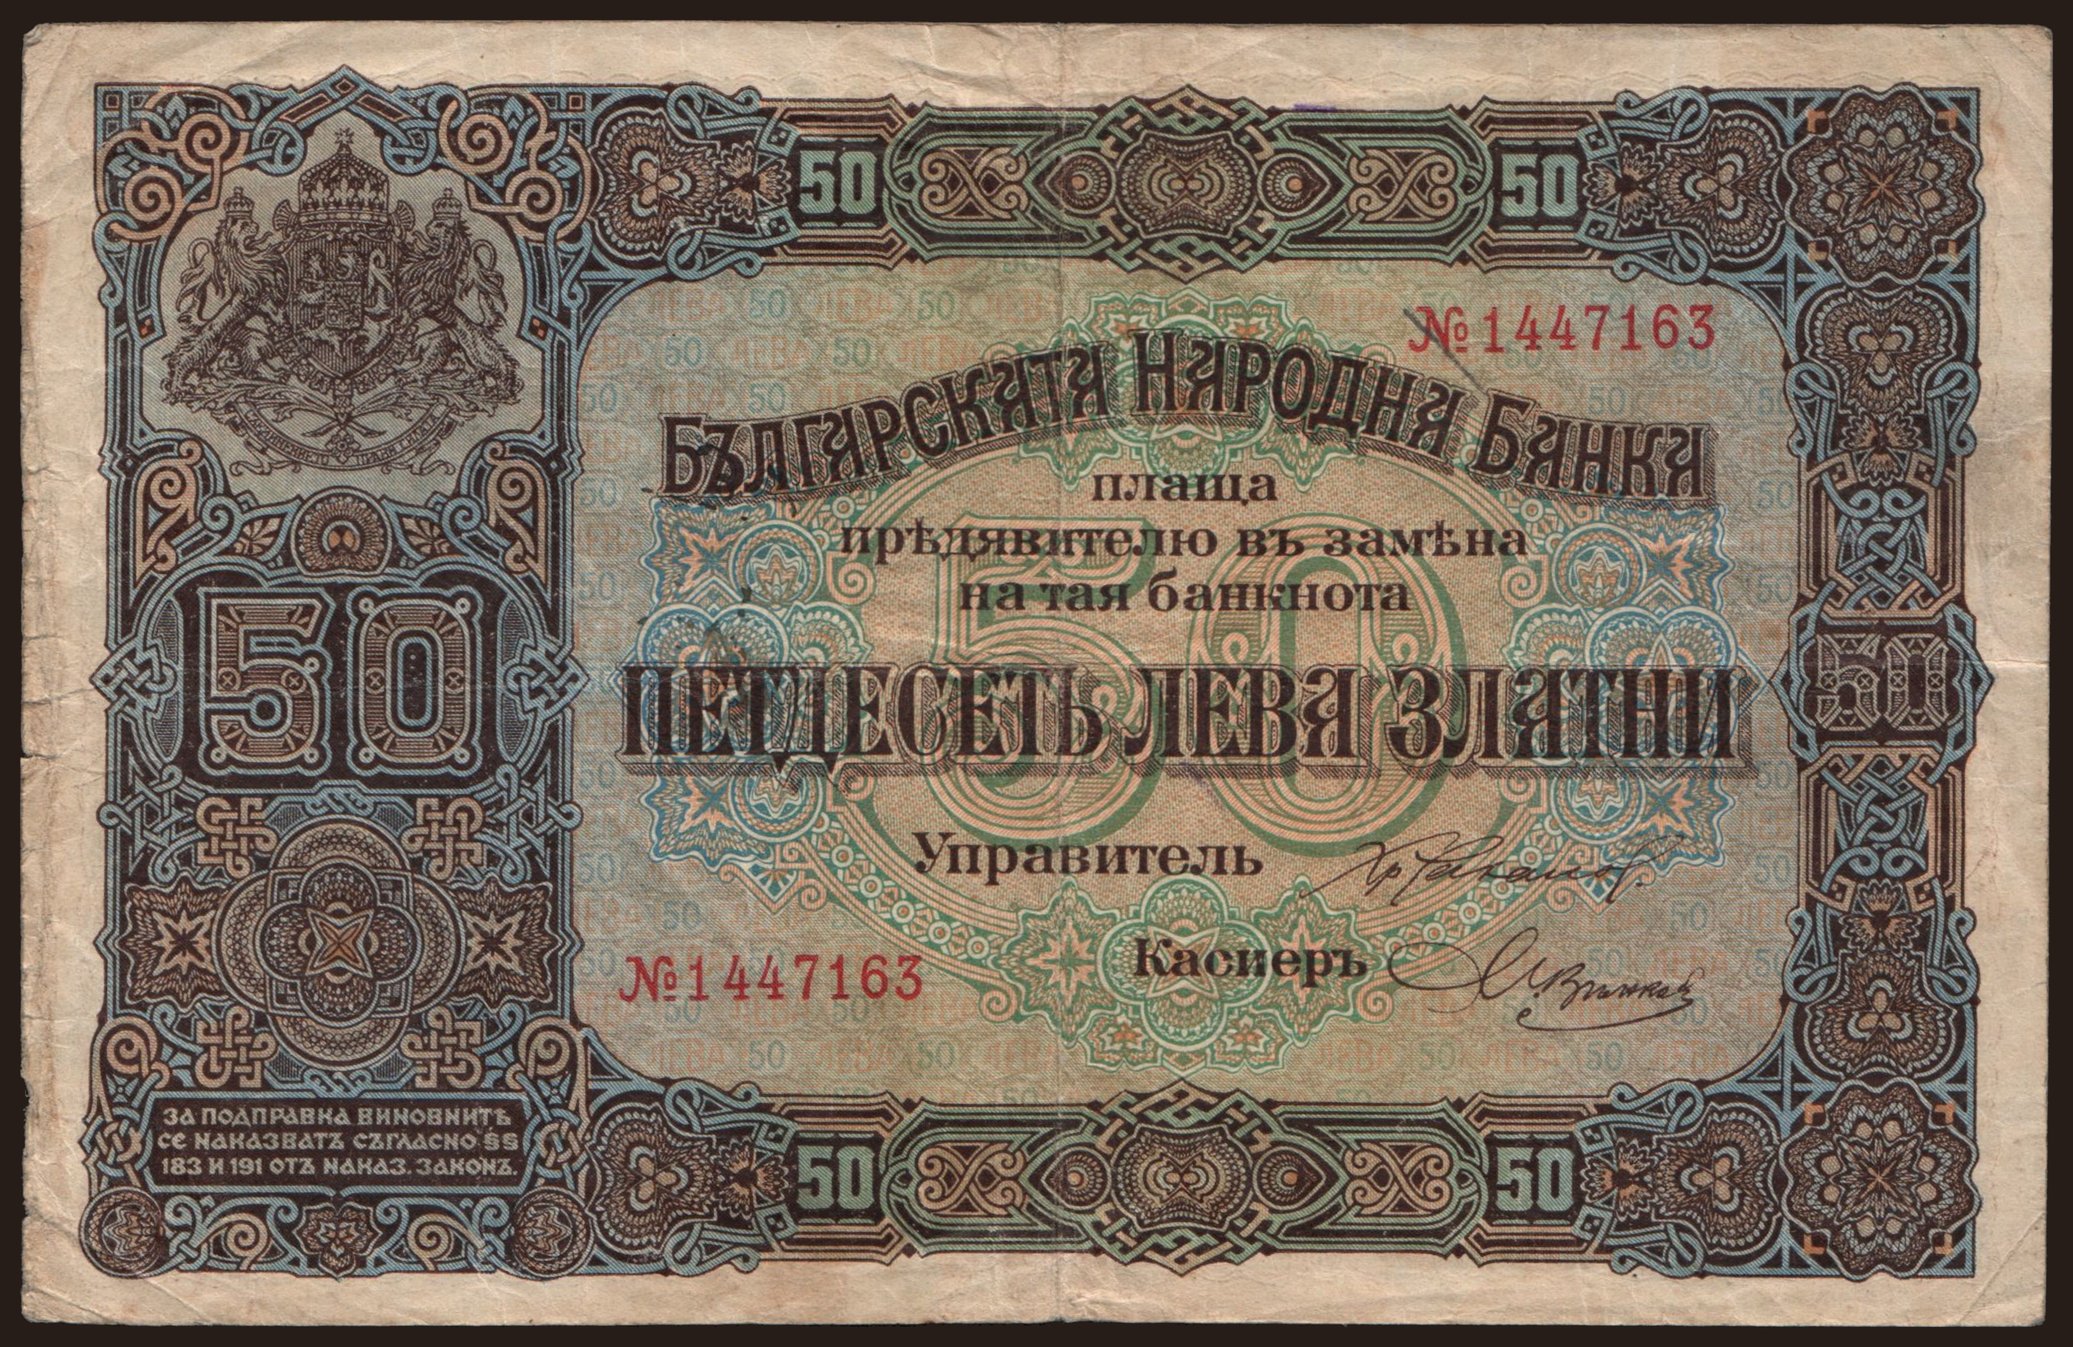 50 leva, 1917